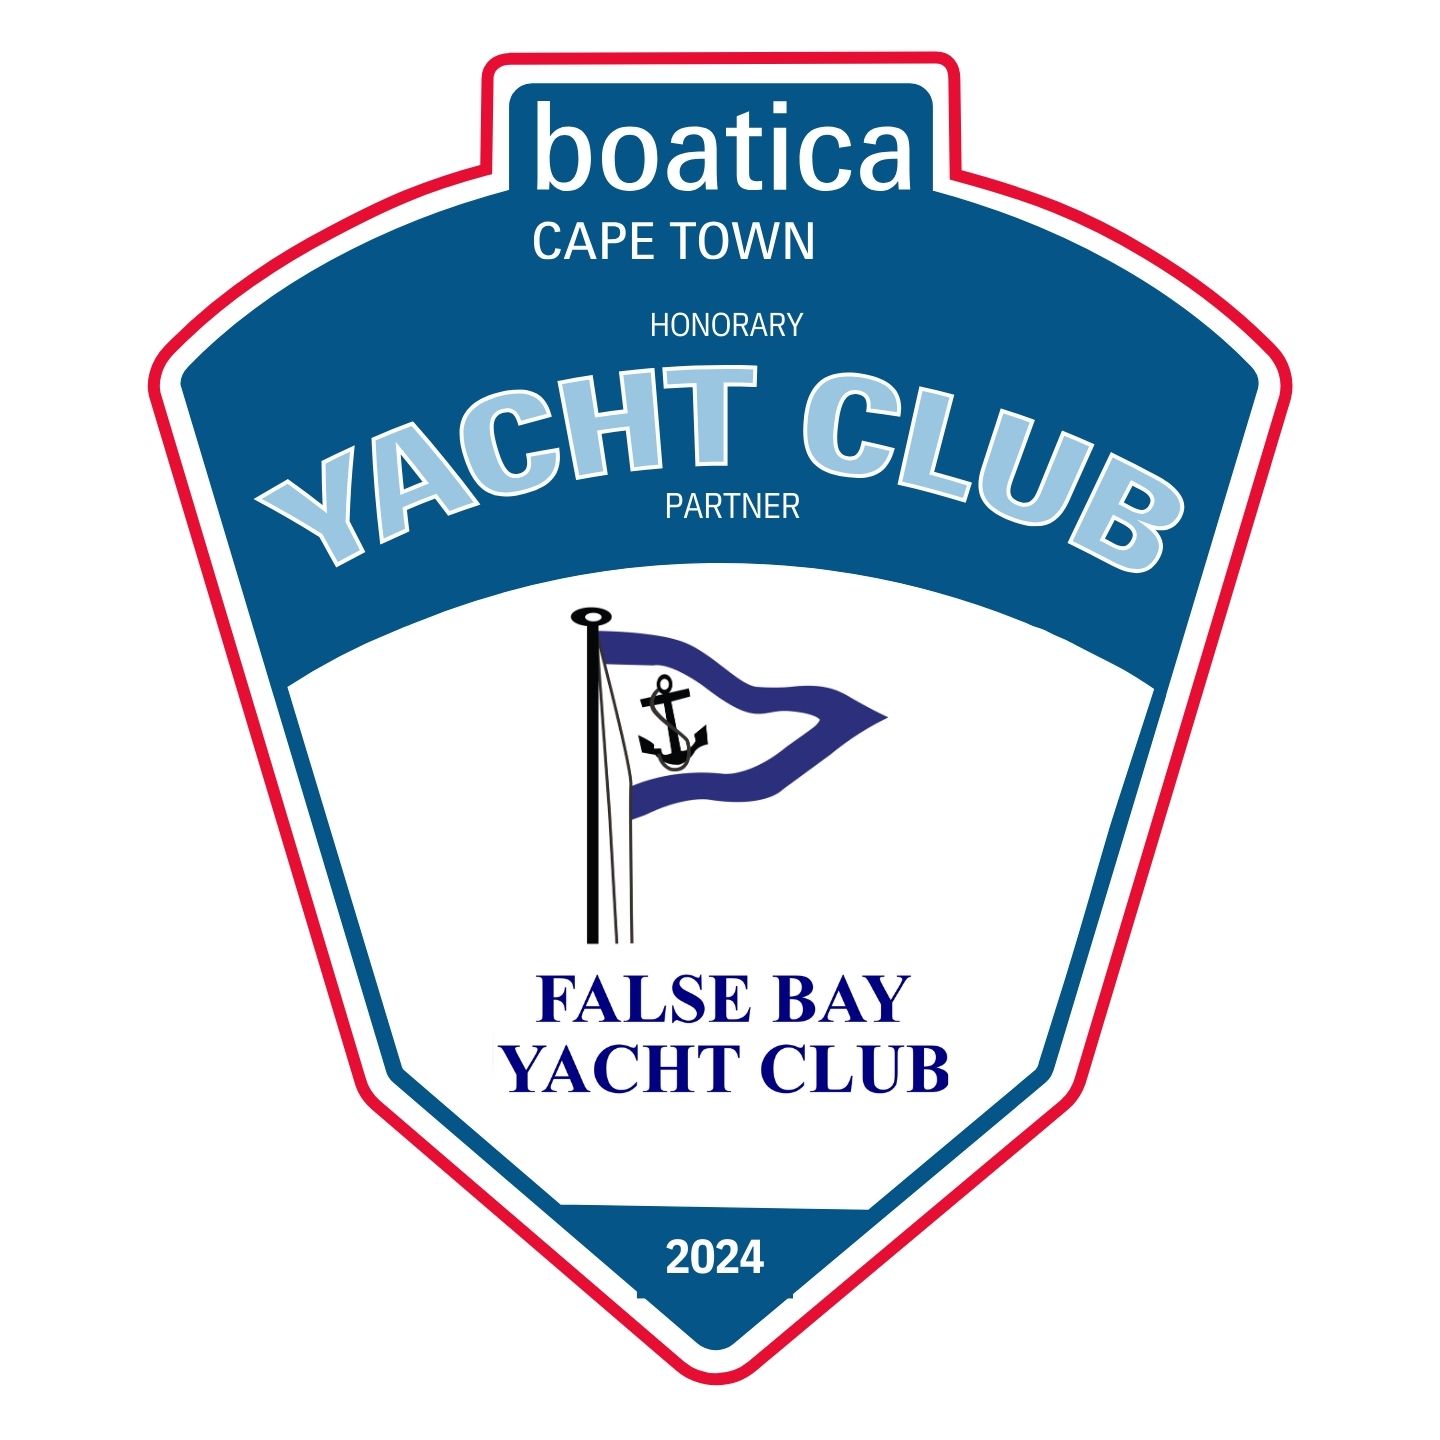 Boatica honorary yacht club partner logo.ai - 2